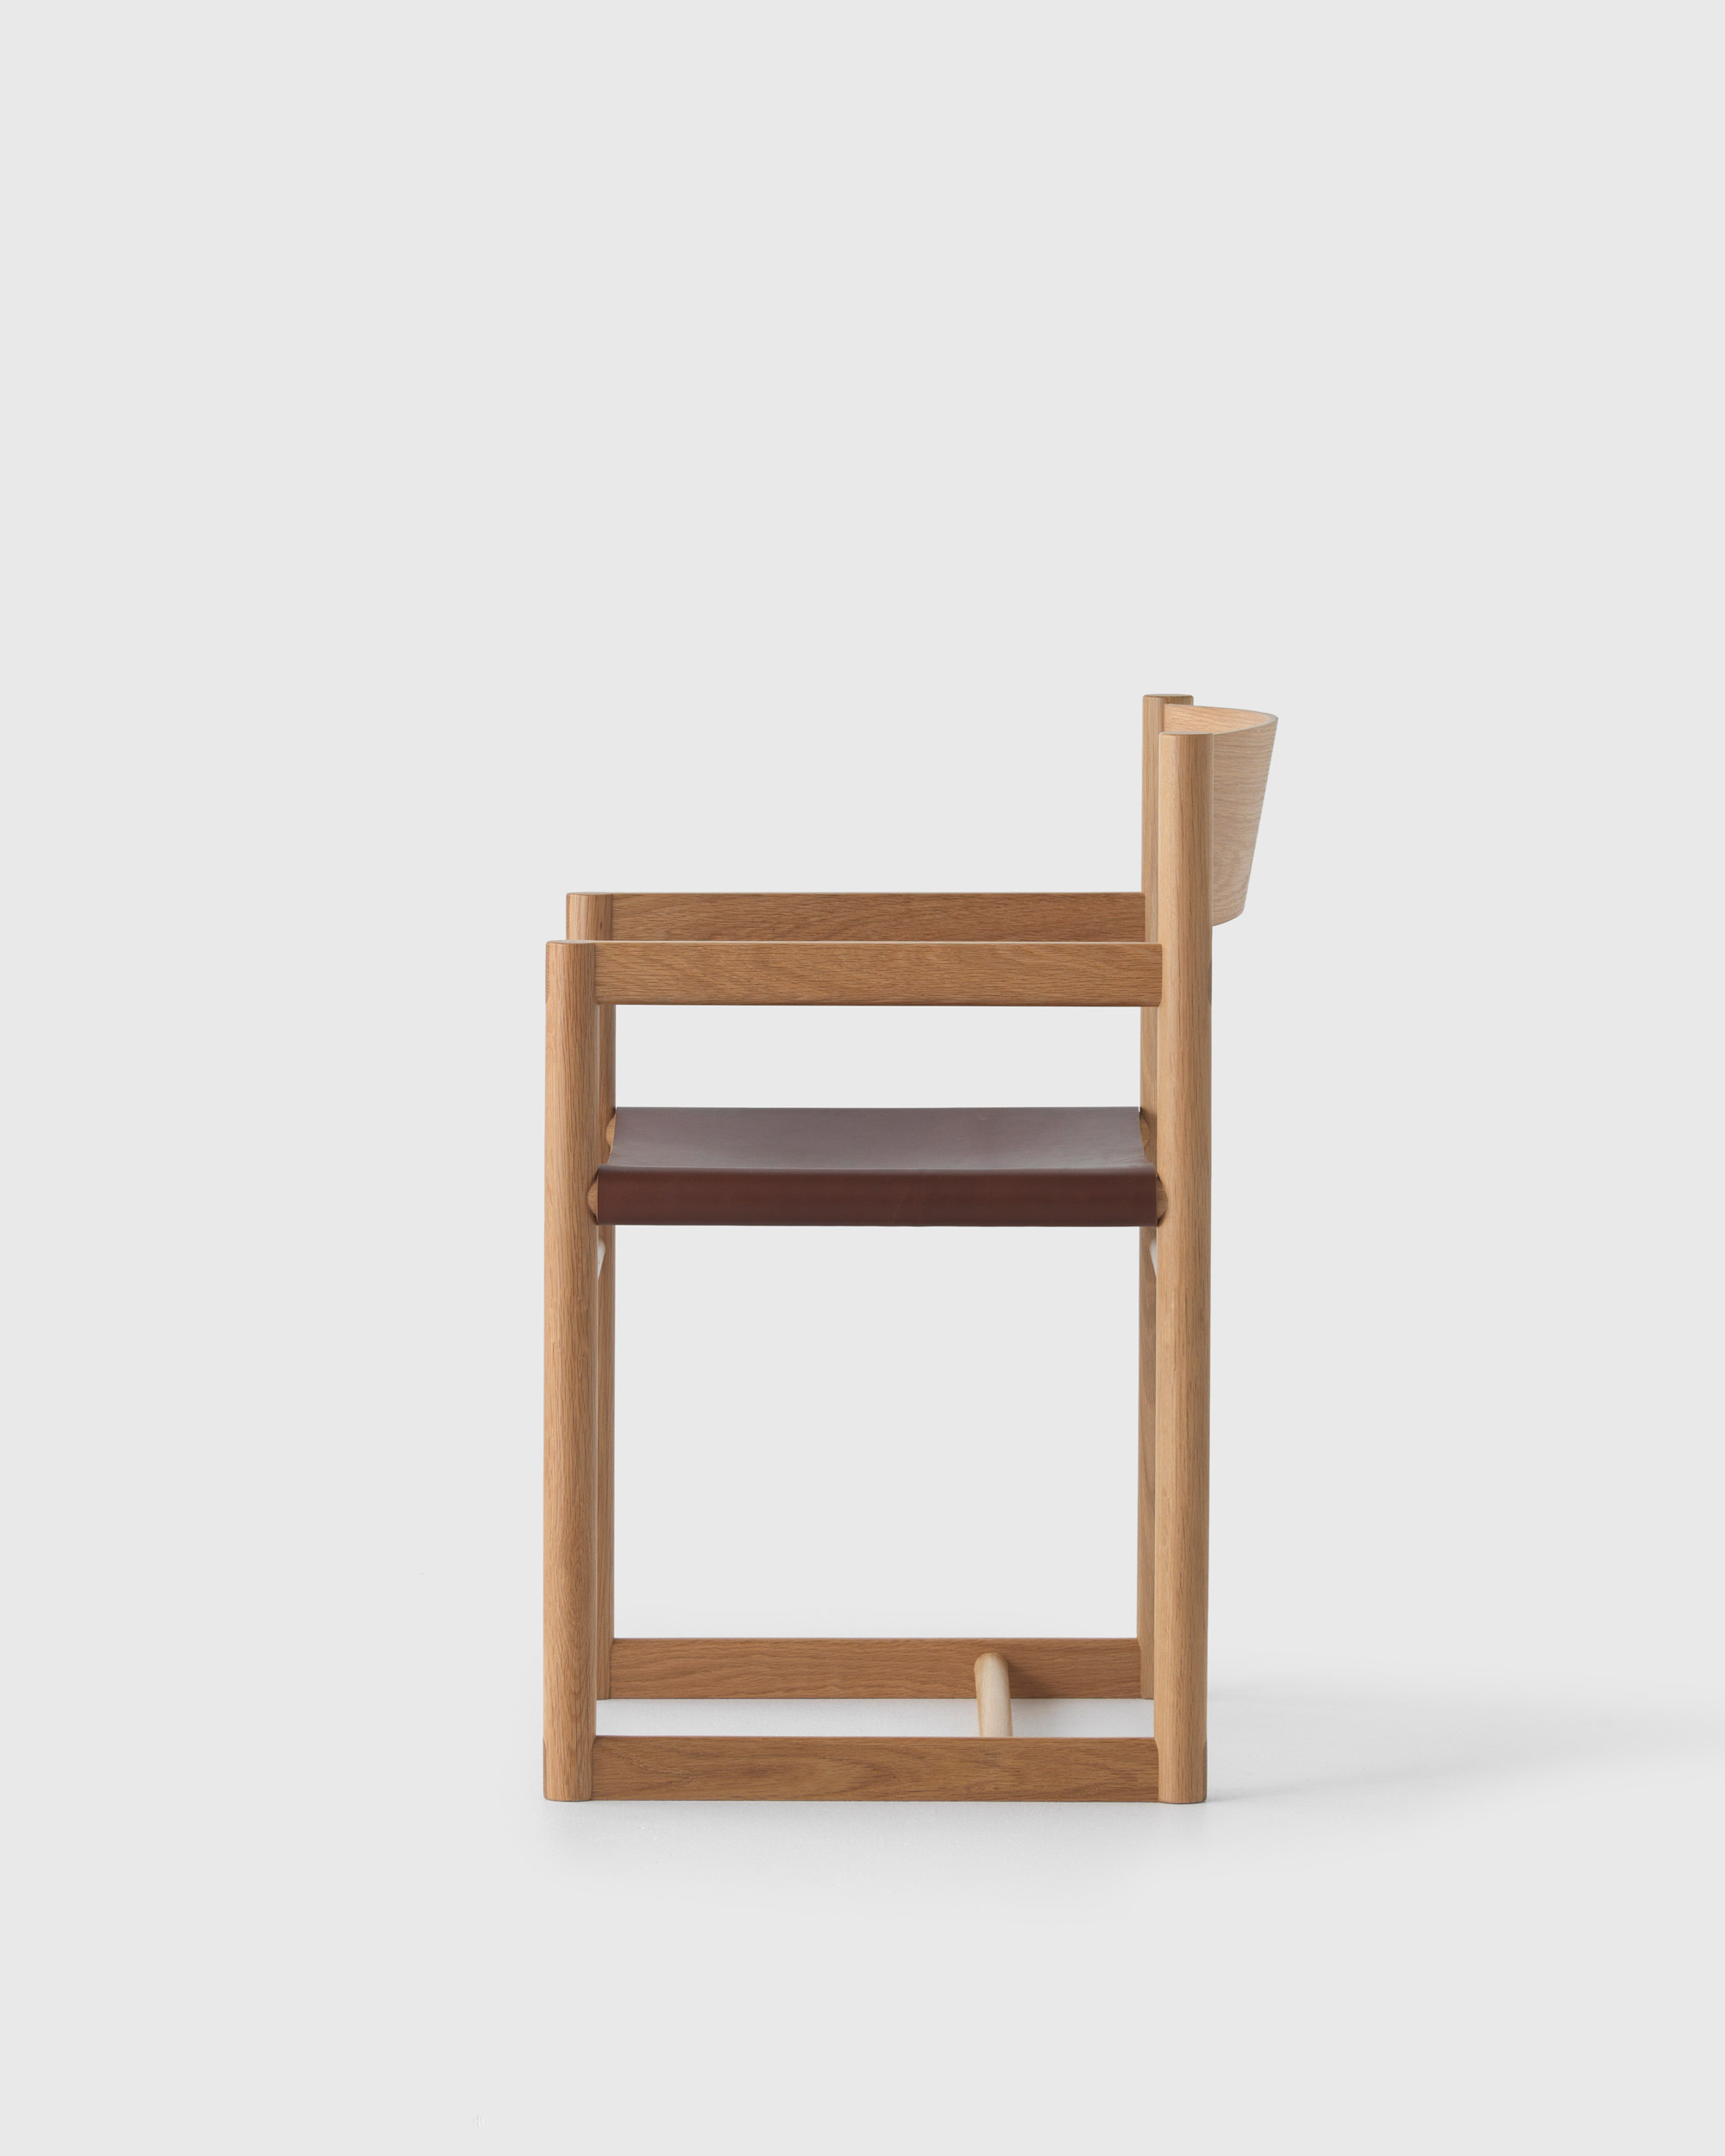 Minimalist Passenger Chair designed by Simon James